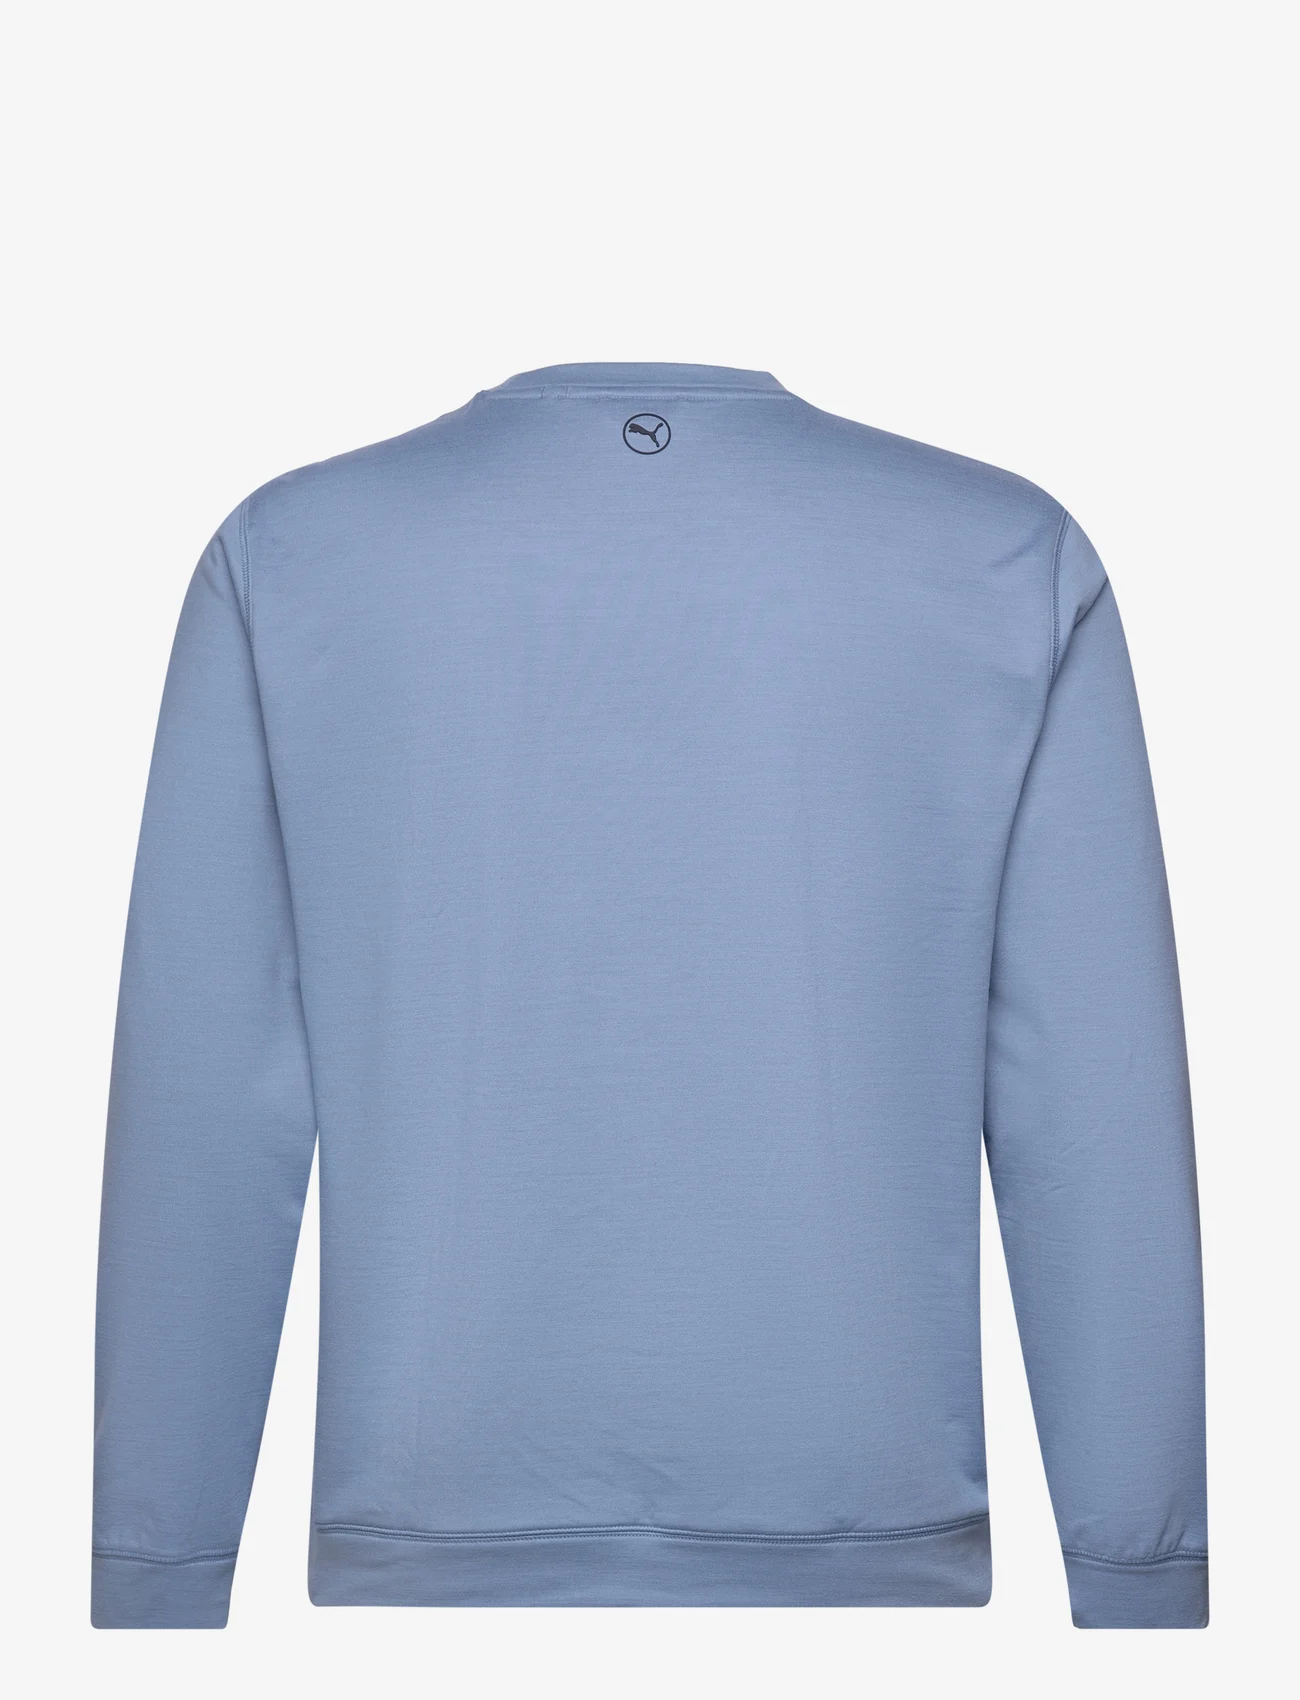 PUMA Golf - Cloudspun Patch Crewneck - sweatshirts - zen blue heather - 1